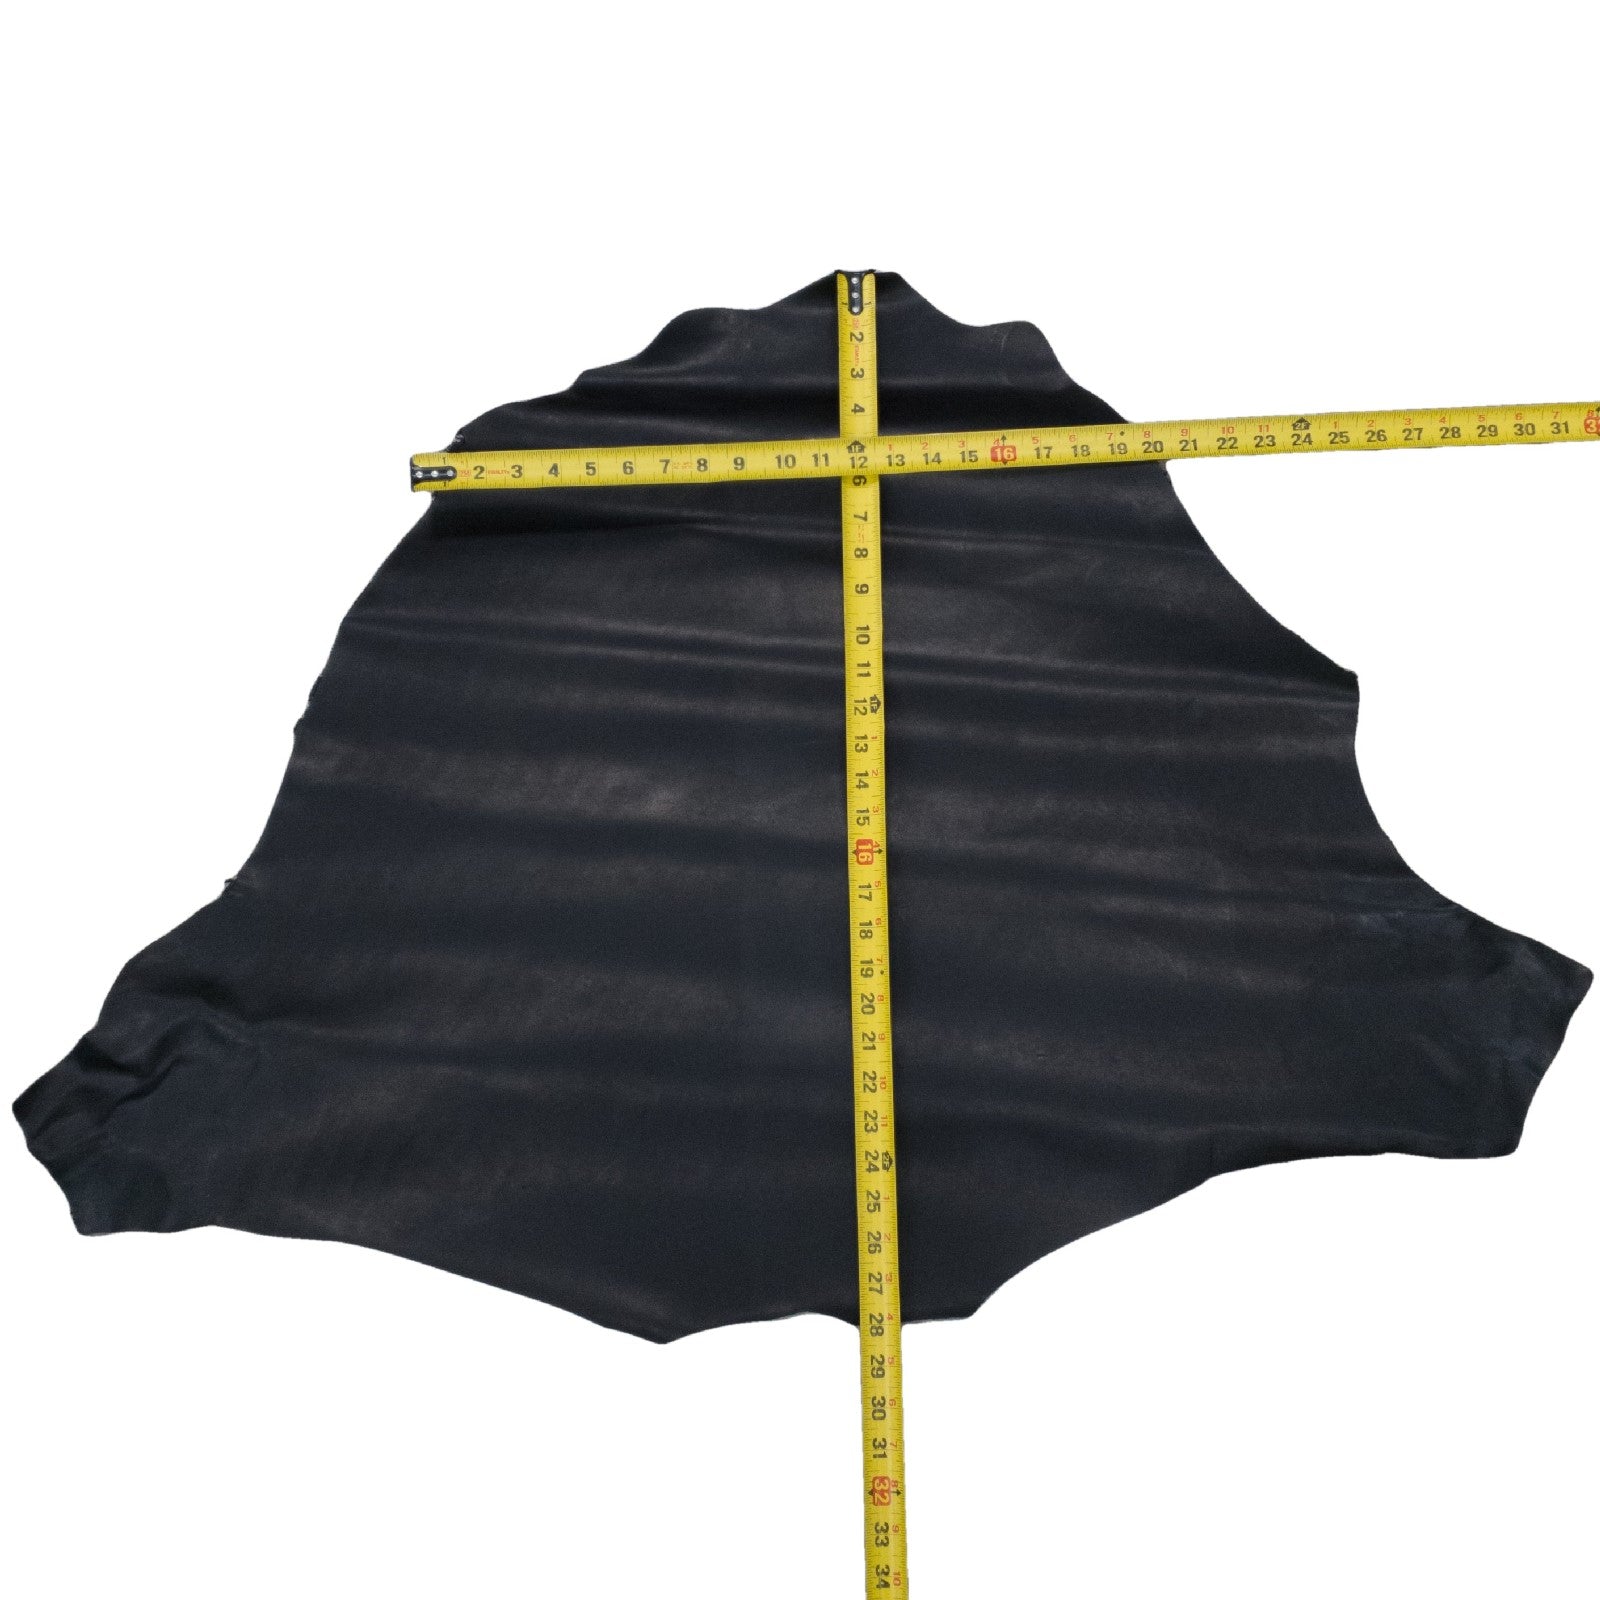 Black Dyed Veg Tan, 4 - 7 Sq Ft, 2-3 oz Kangaroo Hides, 5 Sq Ft / Hide 9 | The Leather Guy